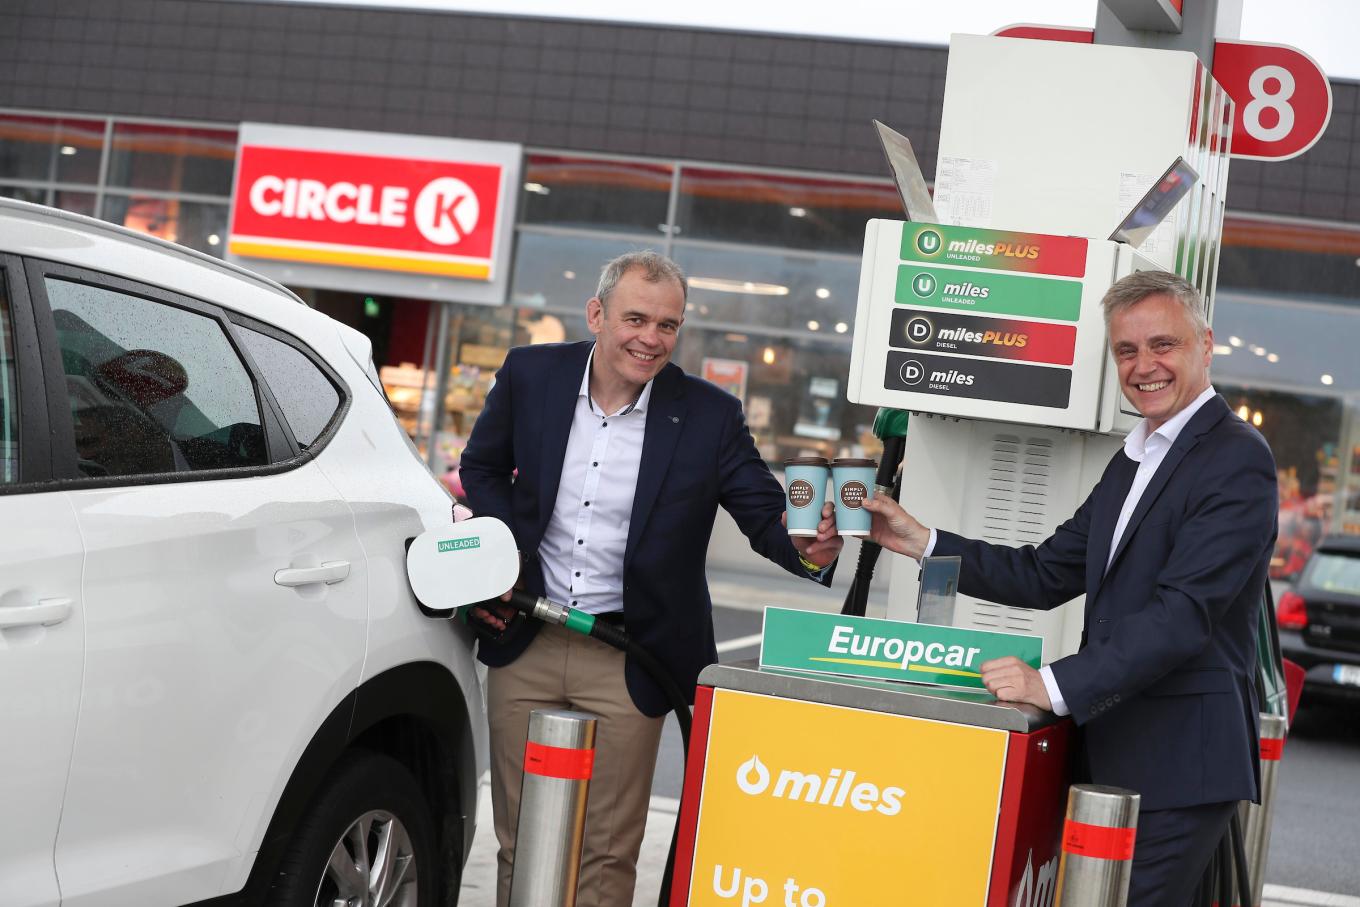 Europcar and Circle K partnership